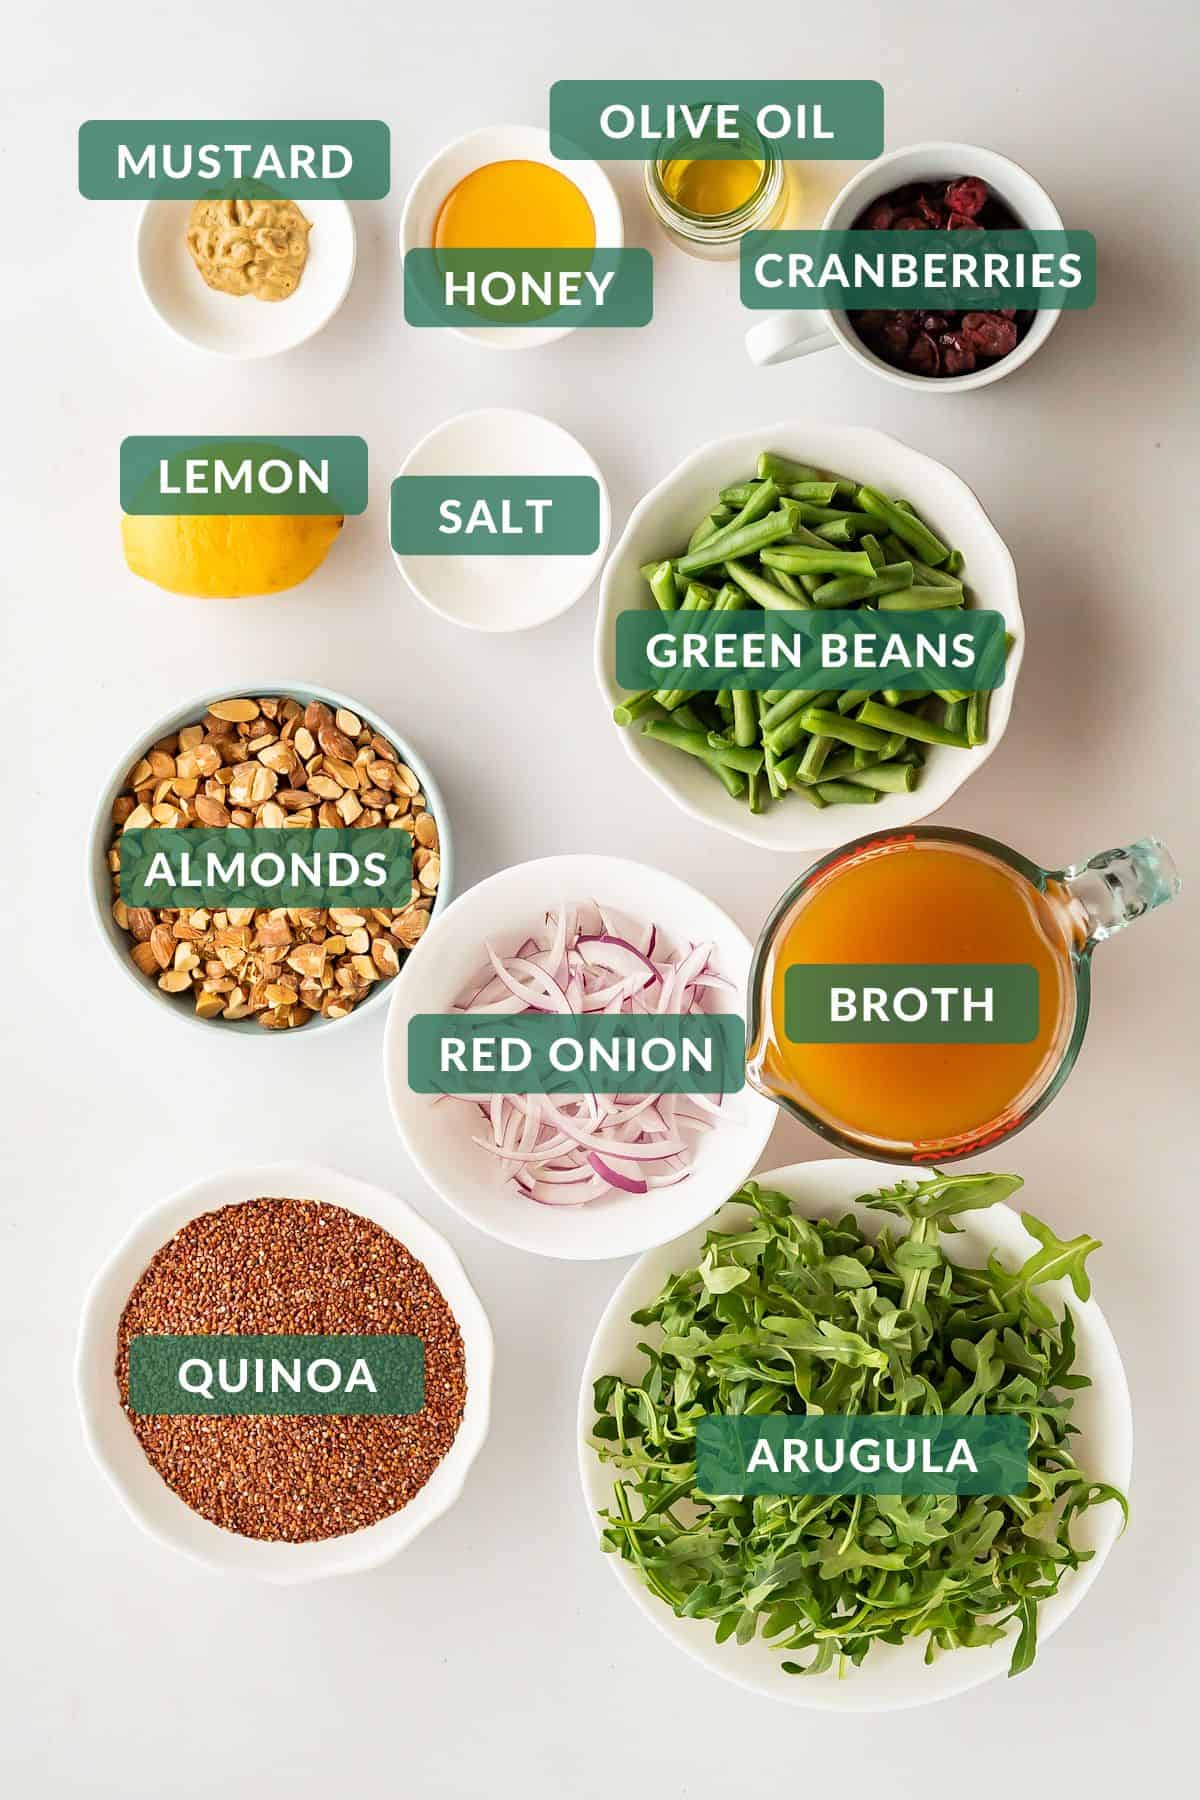 Prepared ingredients needed to make arugula quinoa salad.